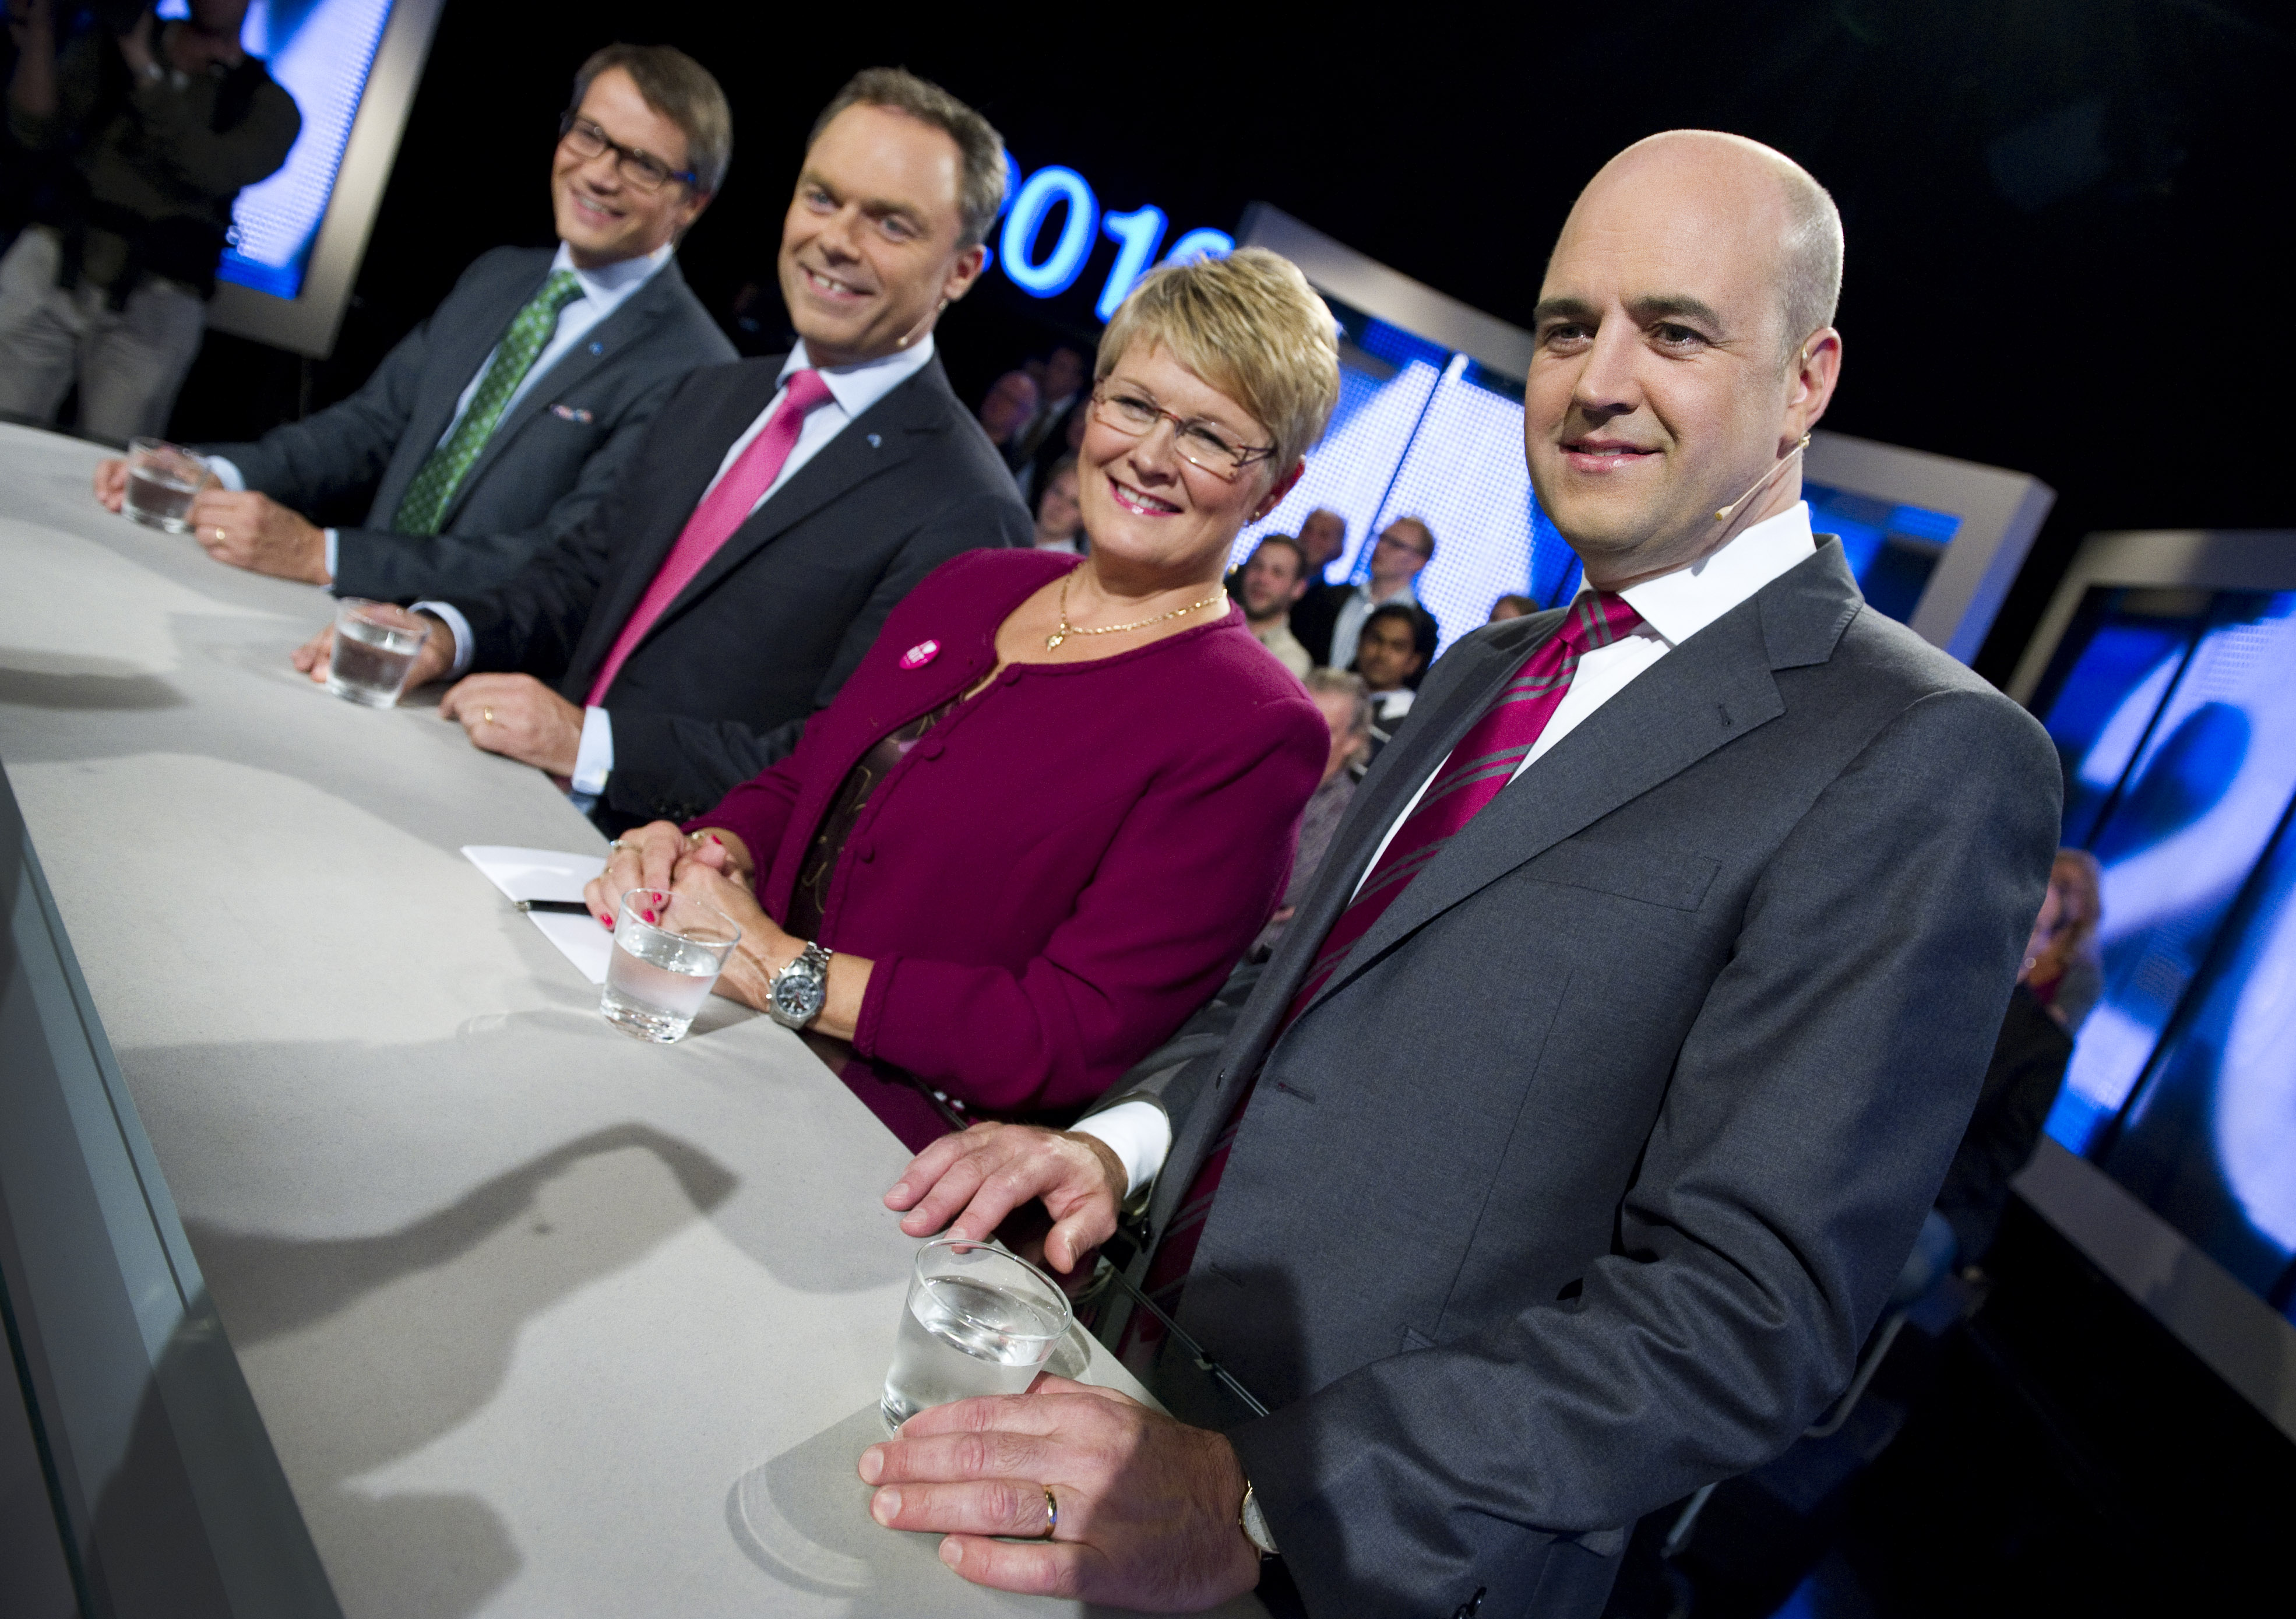 Riksdagsvalet 2010, Fredrik Reinfeldt, Jenny Östergren, Partiledarutfrågning, Malou von Sivers, Jan Björklund, Alliansen, TV4